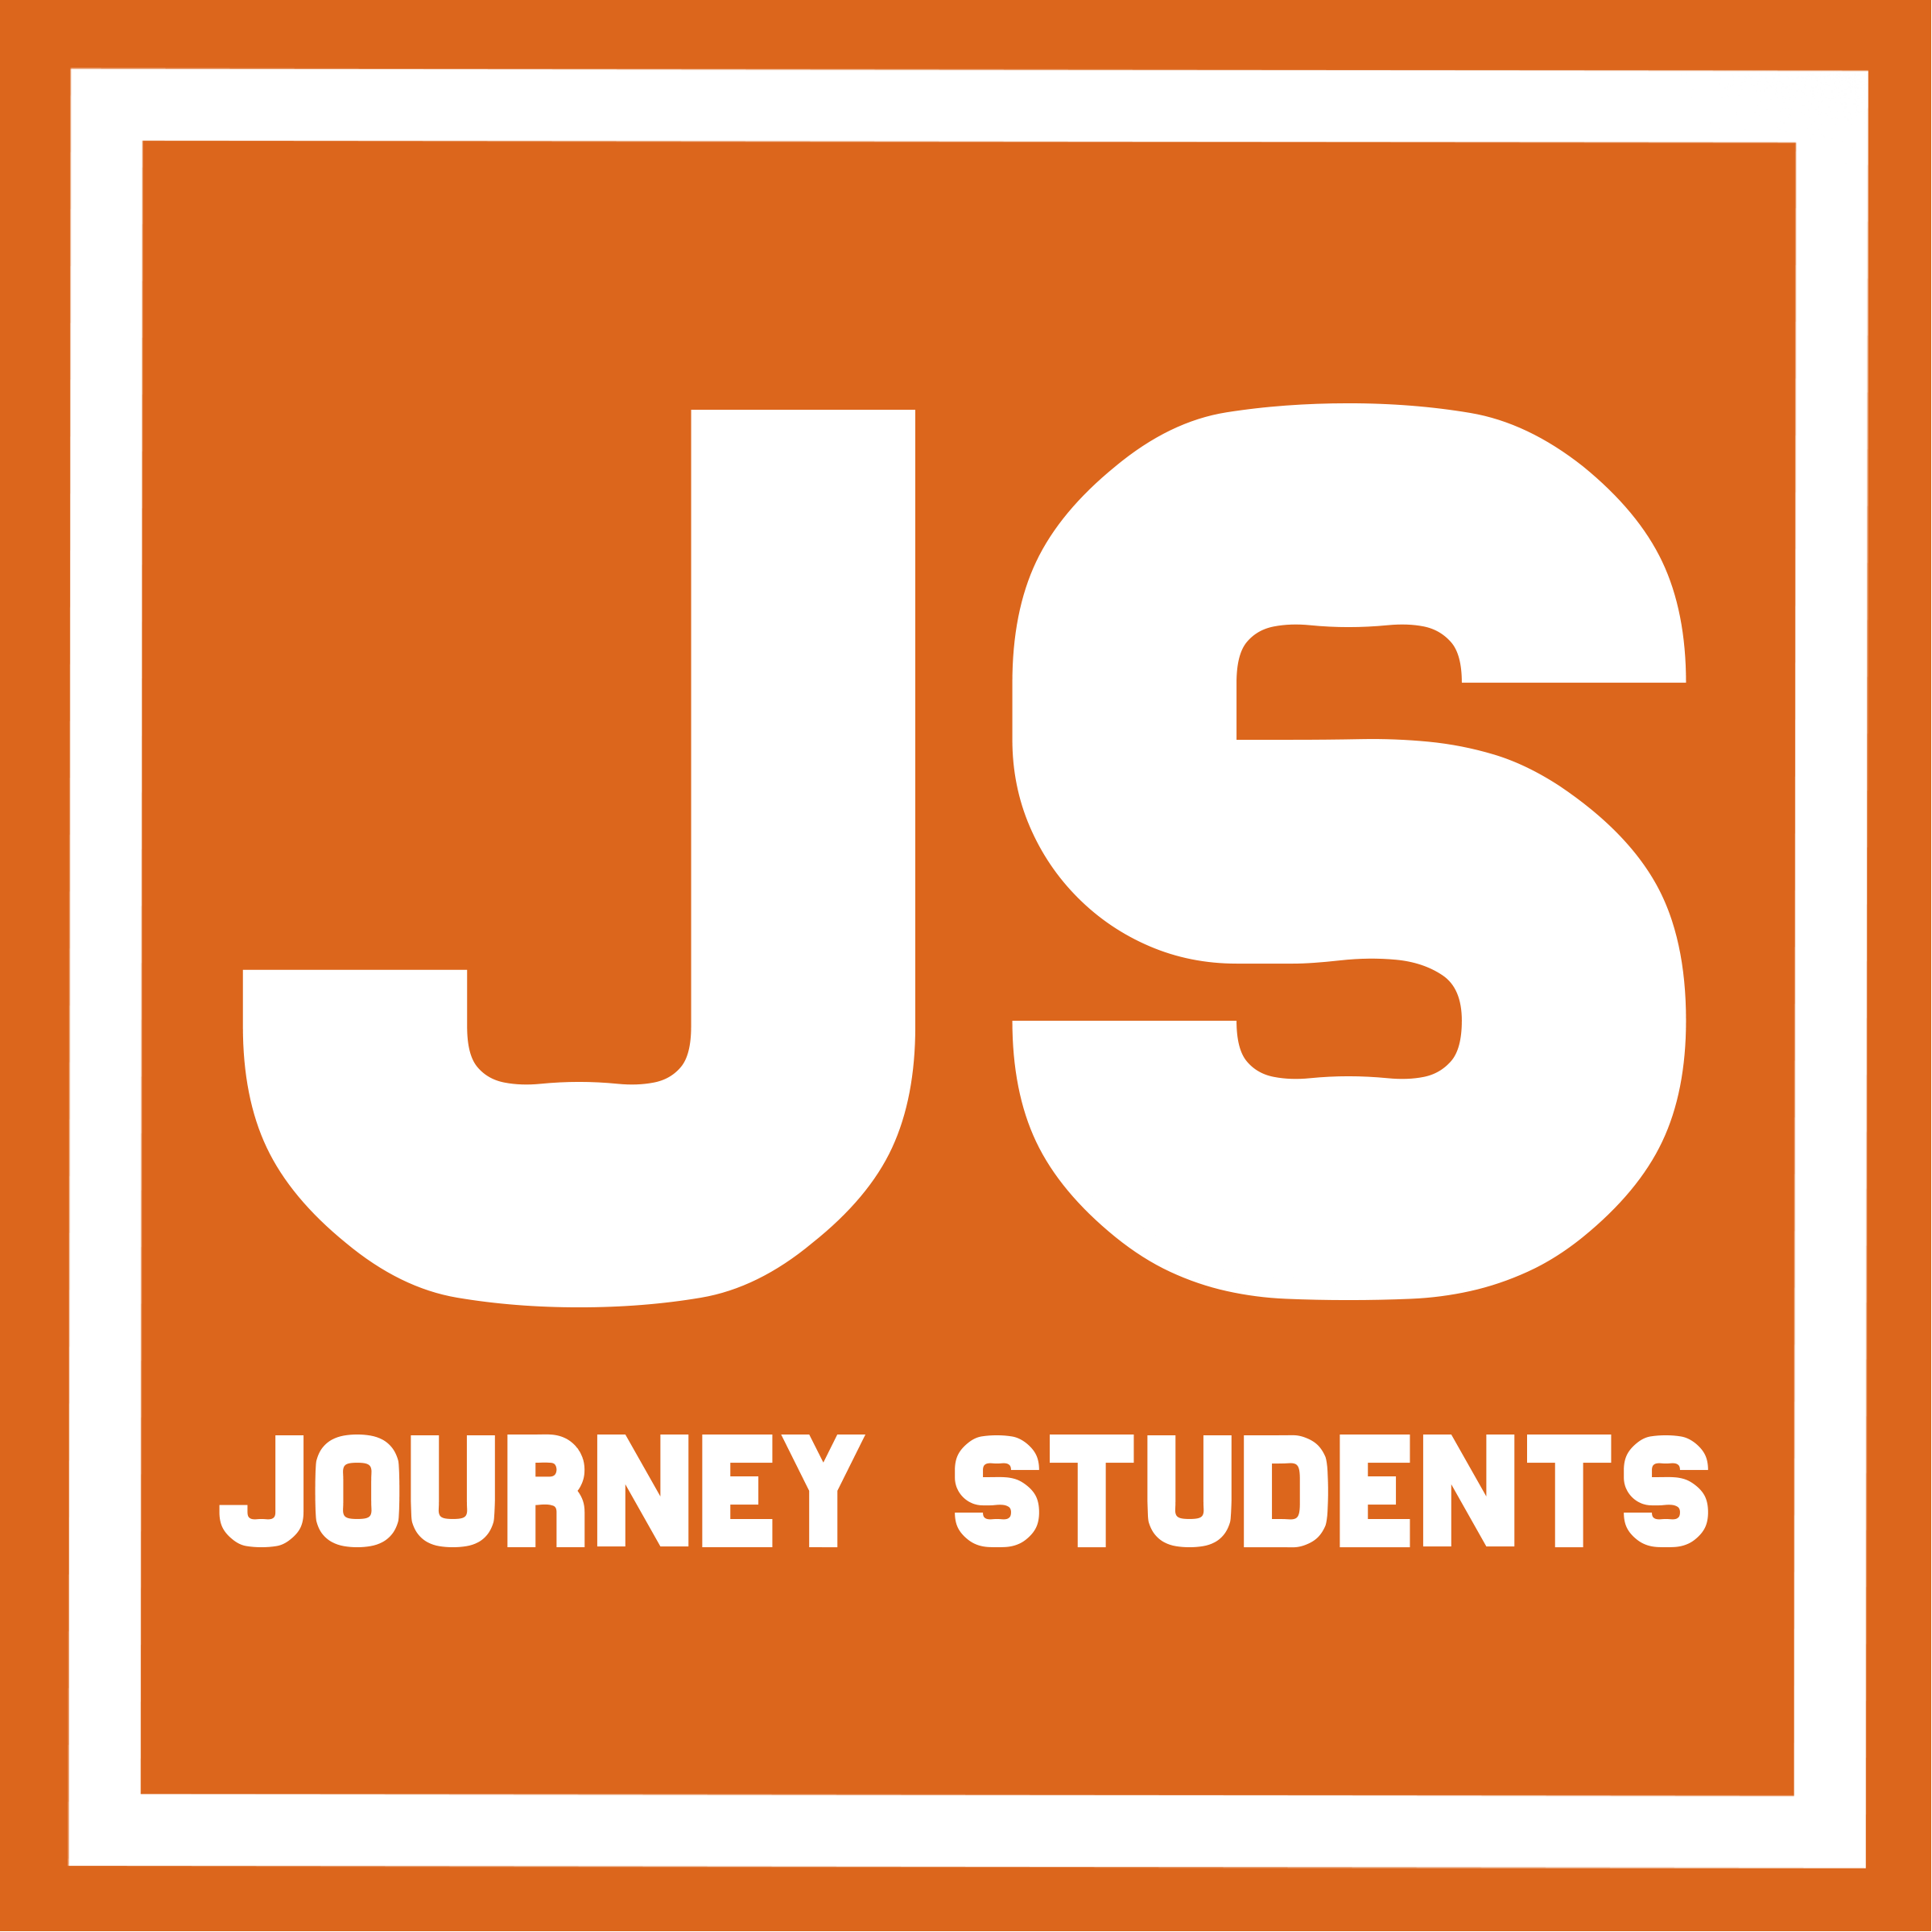 Journey Students logo